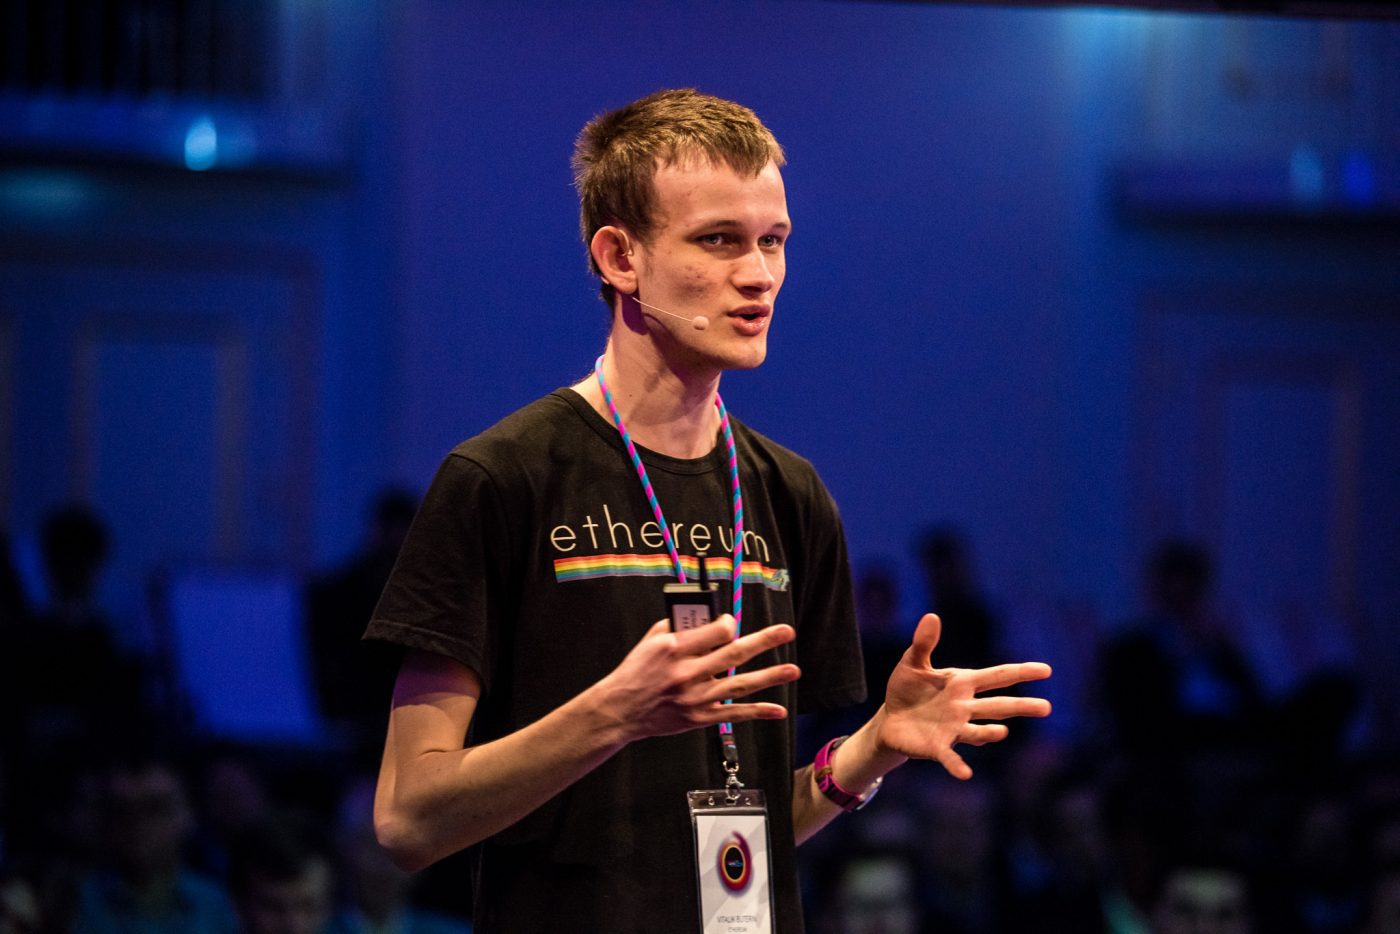 Ethereum (ETH) Founder Vitalik Buterin Eulogizes Zcash (ZEN), Calls It Cool Project